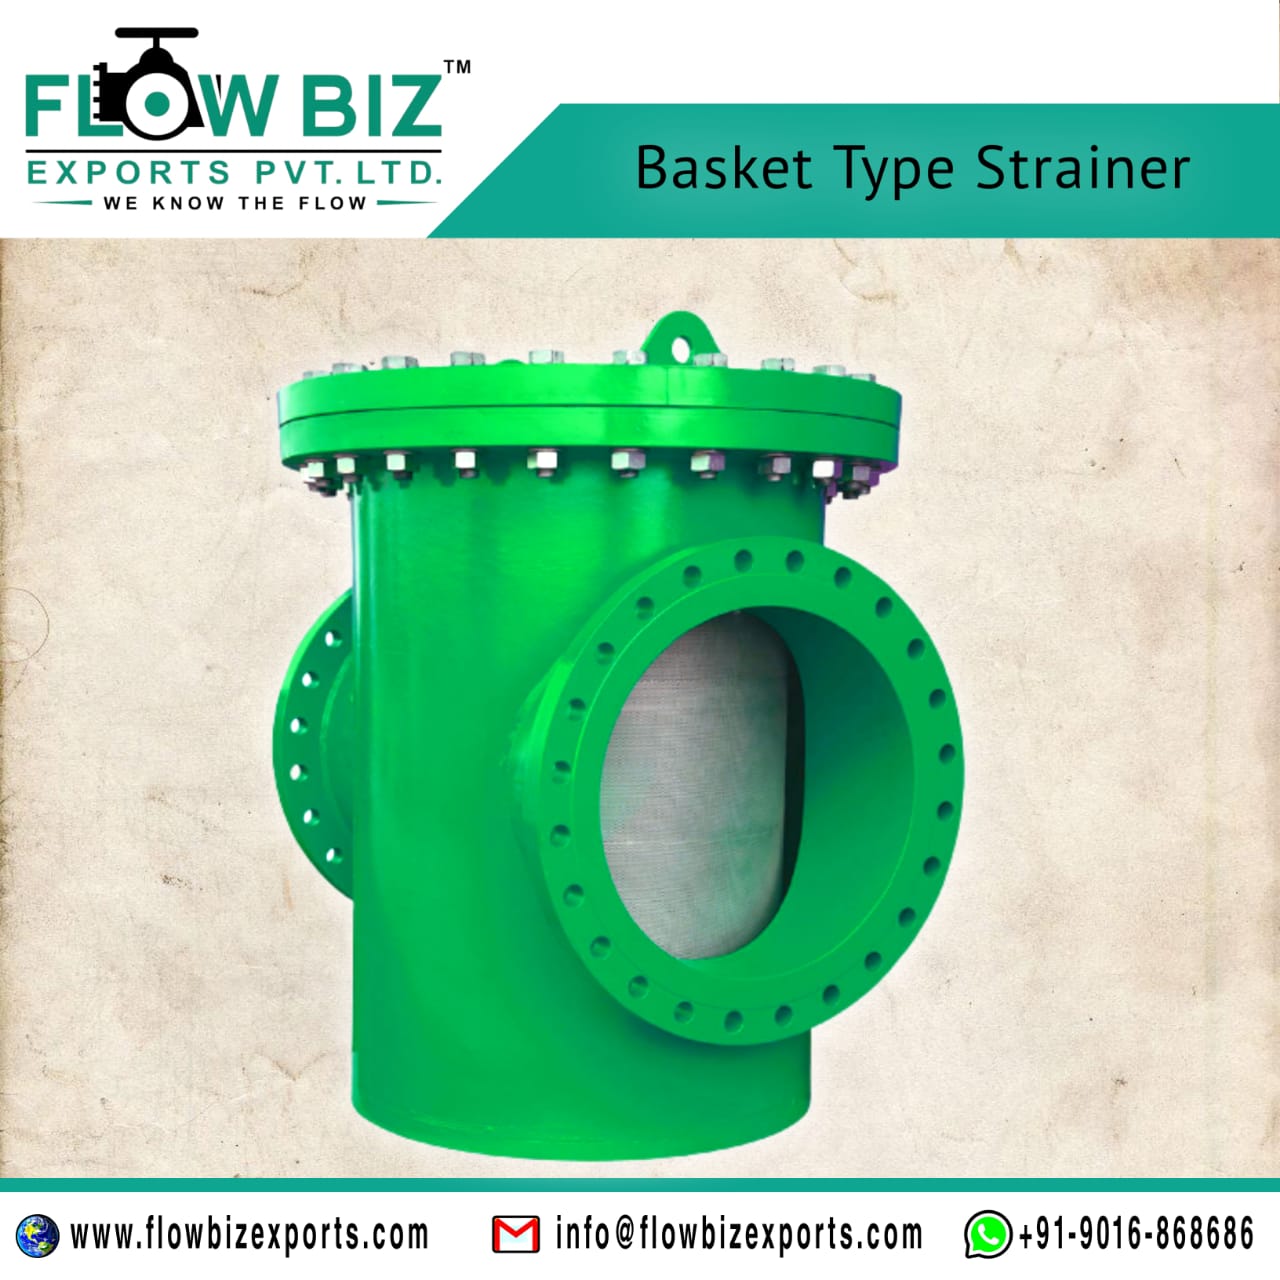 a high-quality basket strainer manufacturer mumbai - Flowbiz 